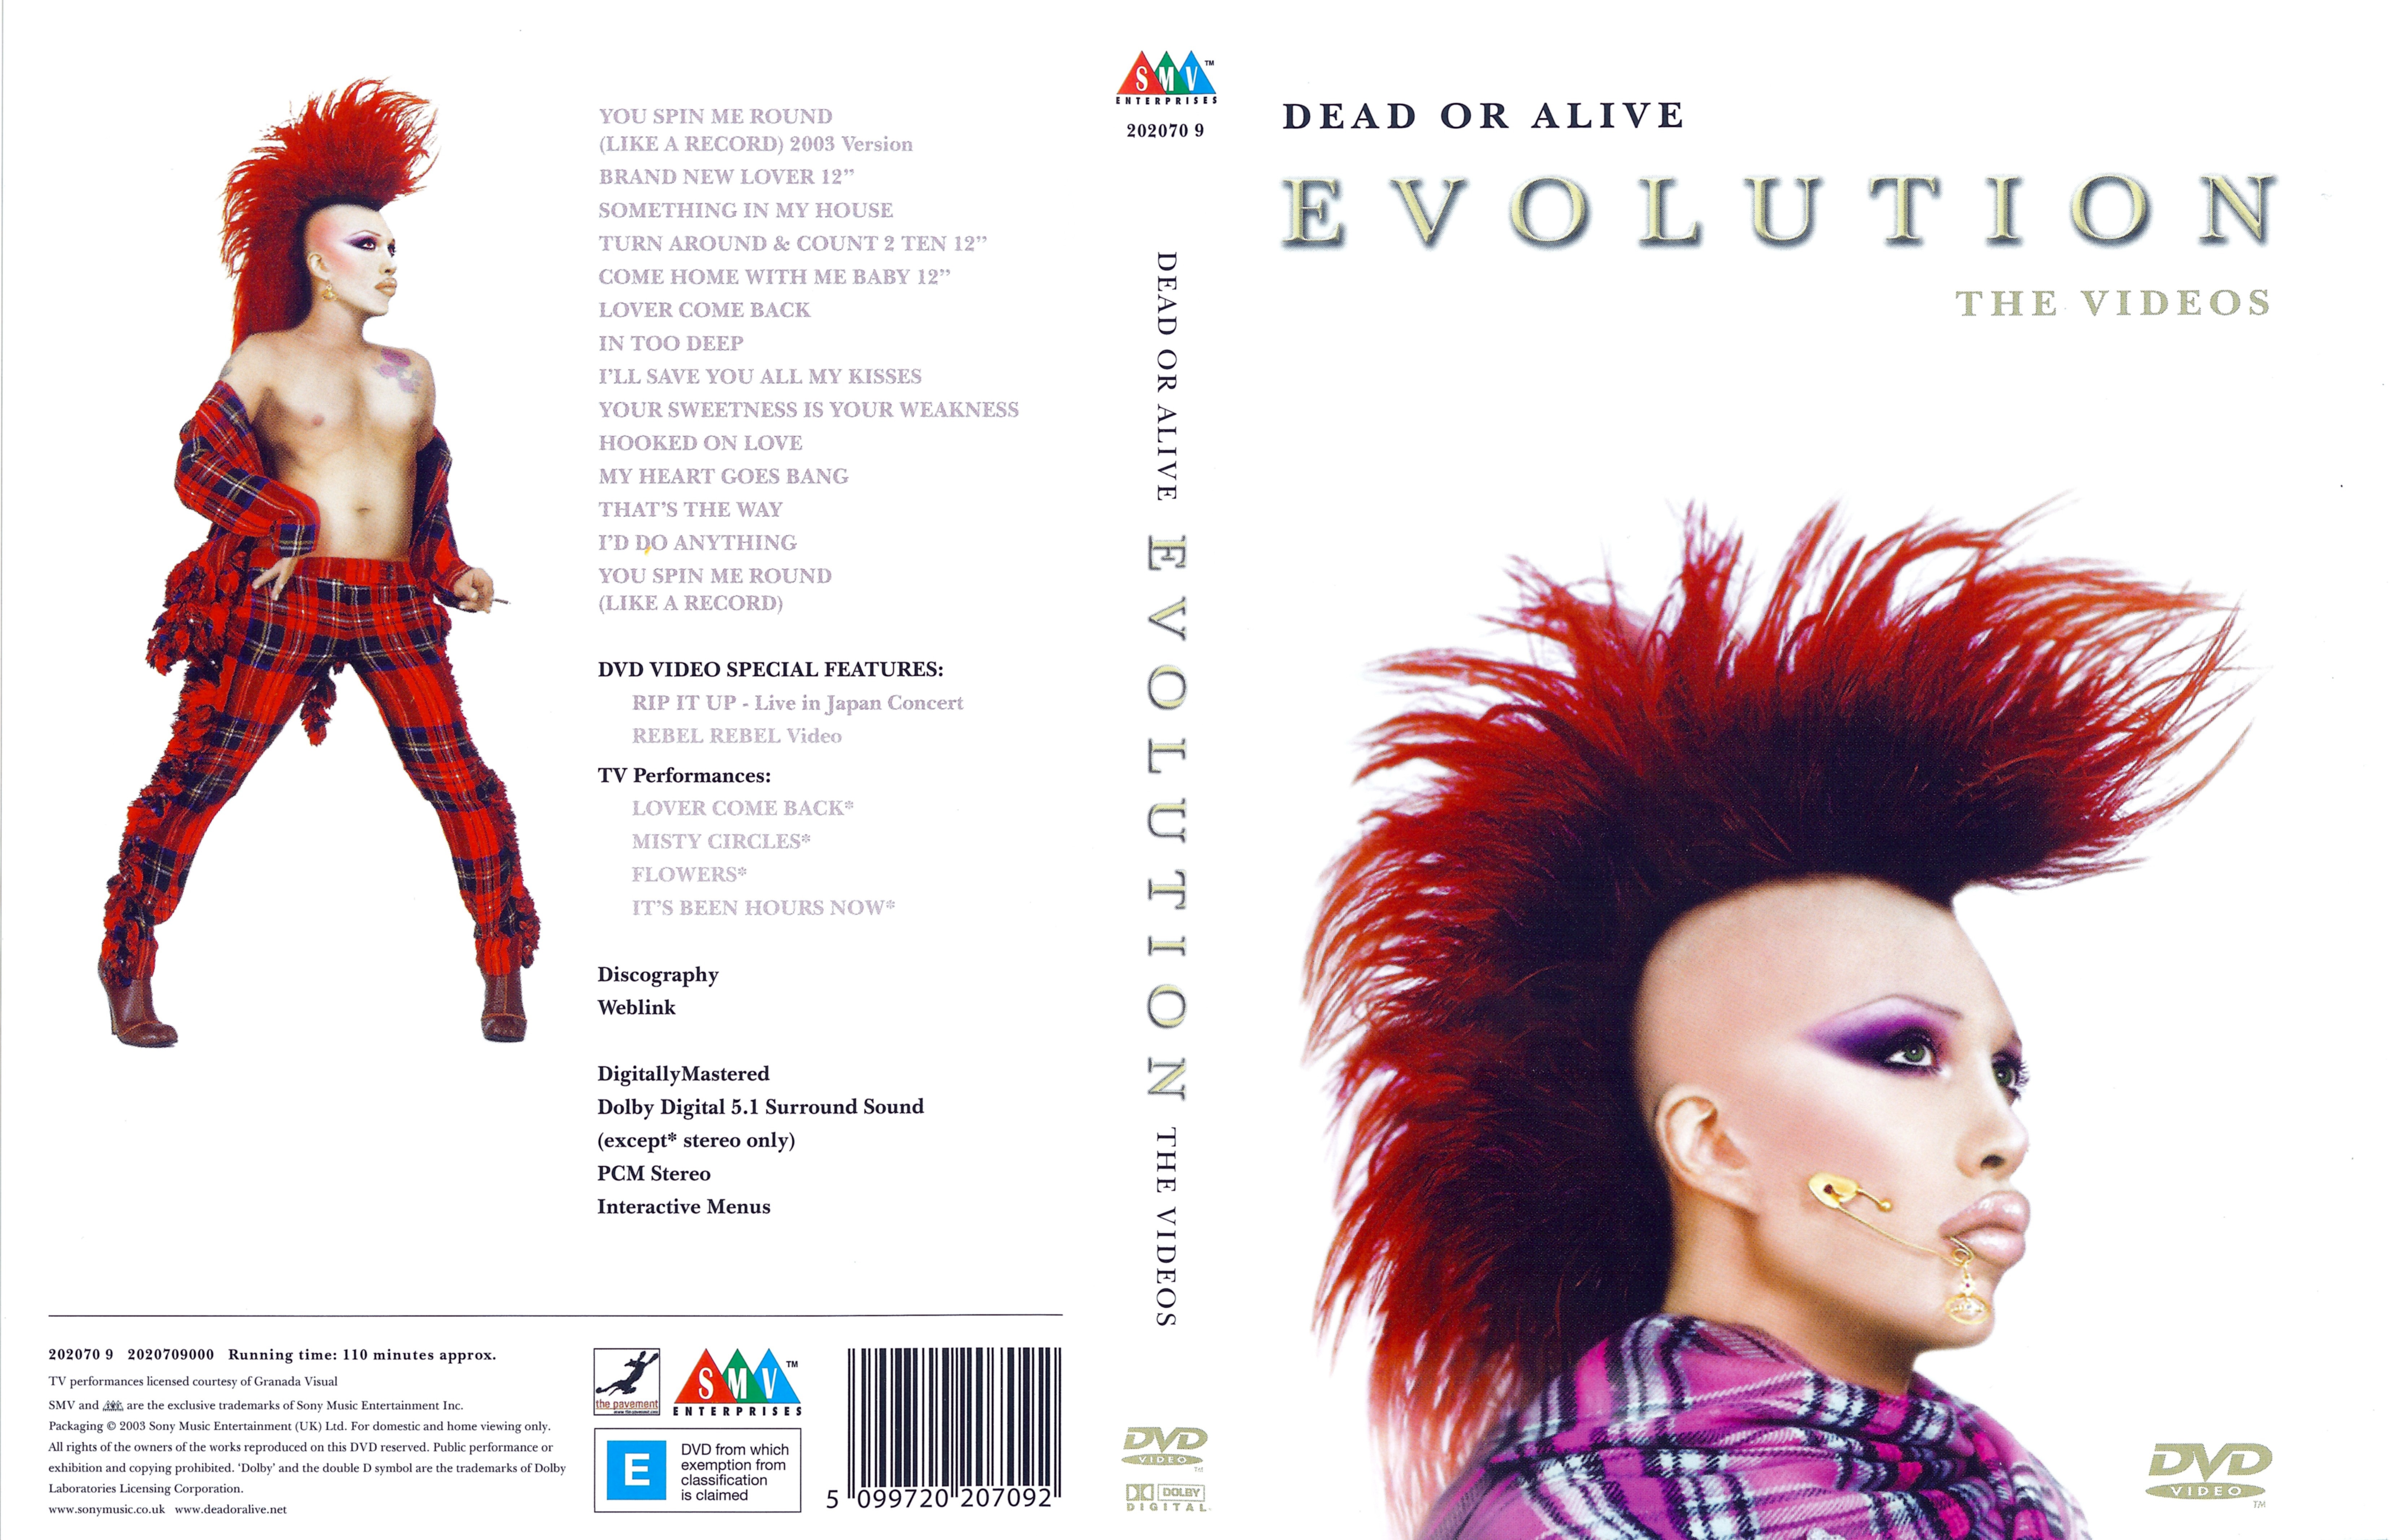 Jaquette DVD Dead or alive Evolution The videos